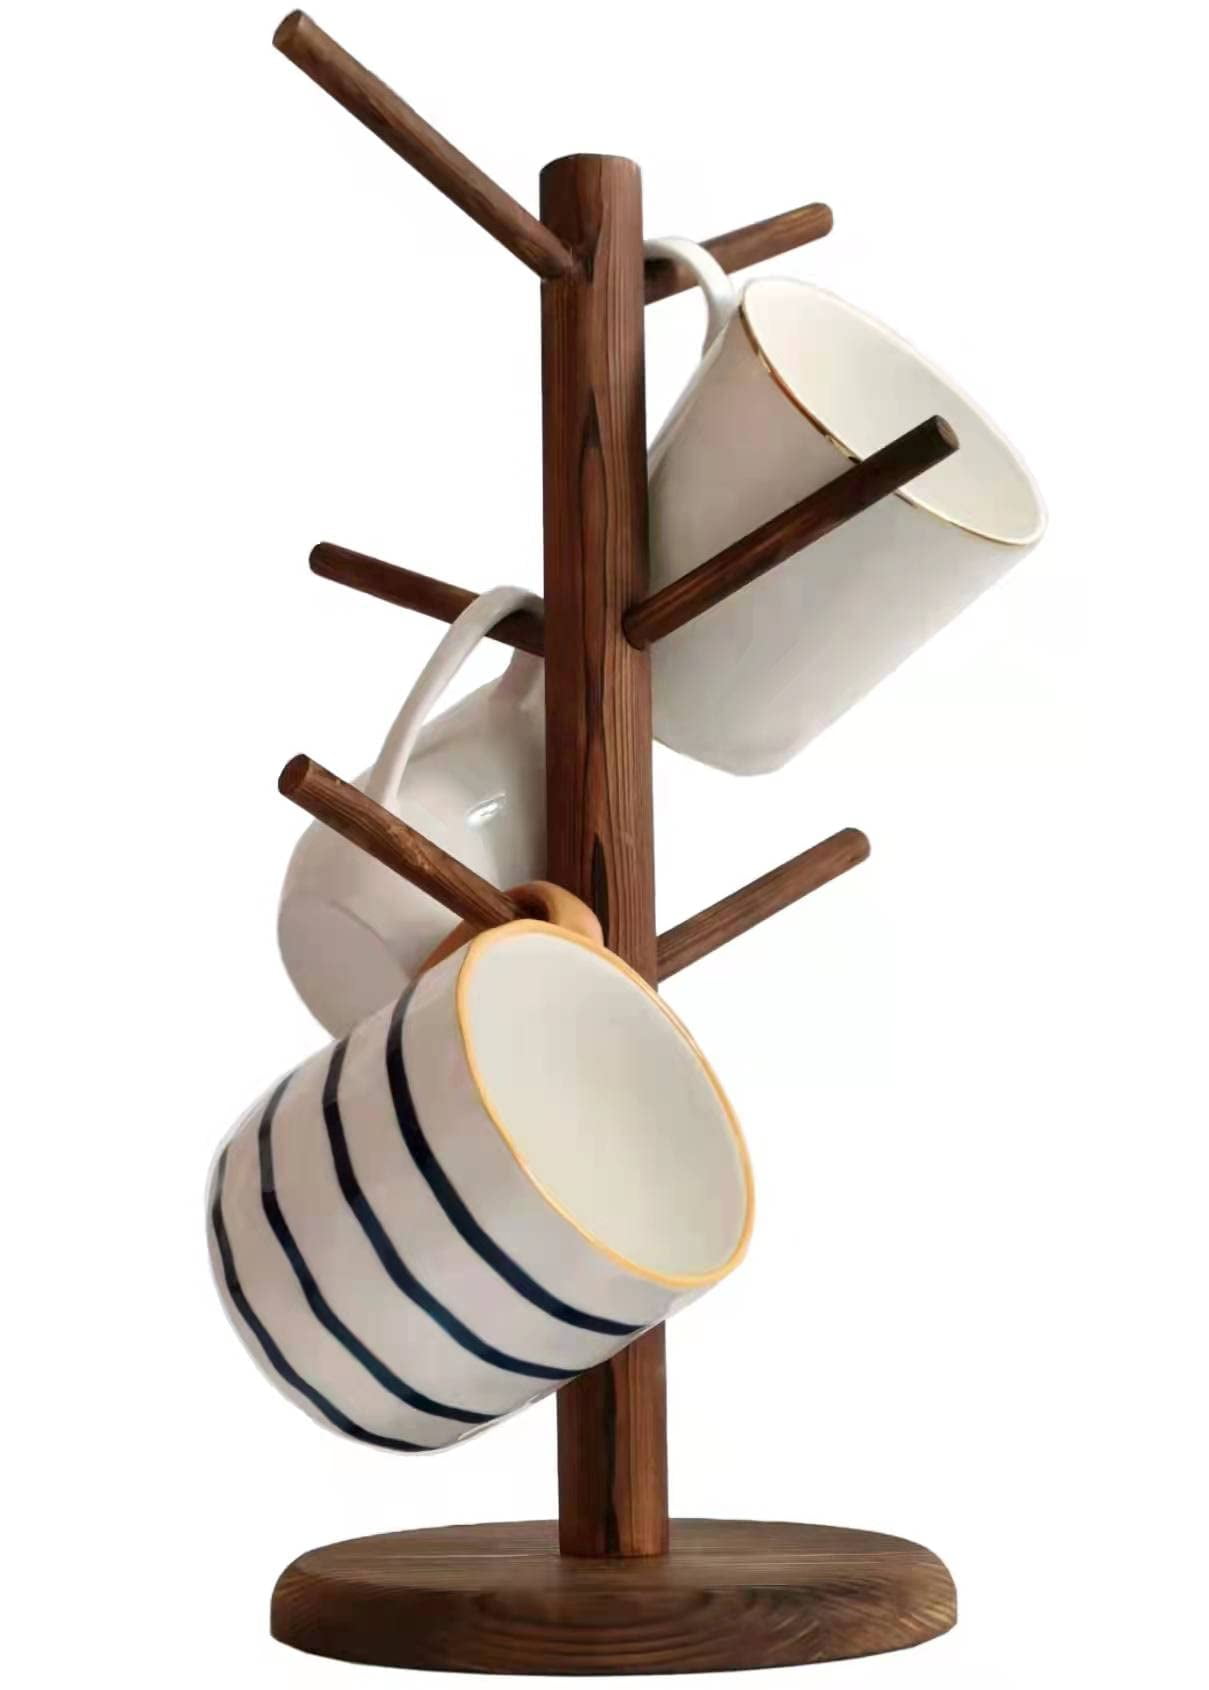 Patelai 14 Inch Coffee Mug Tree Mug Holder Tree Coffee Mug Rack Cup Holders  for Counter with 6 Hooks Removable Mug Stands (Clear,Acrylic)